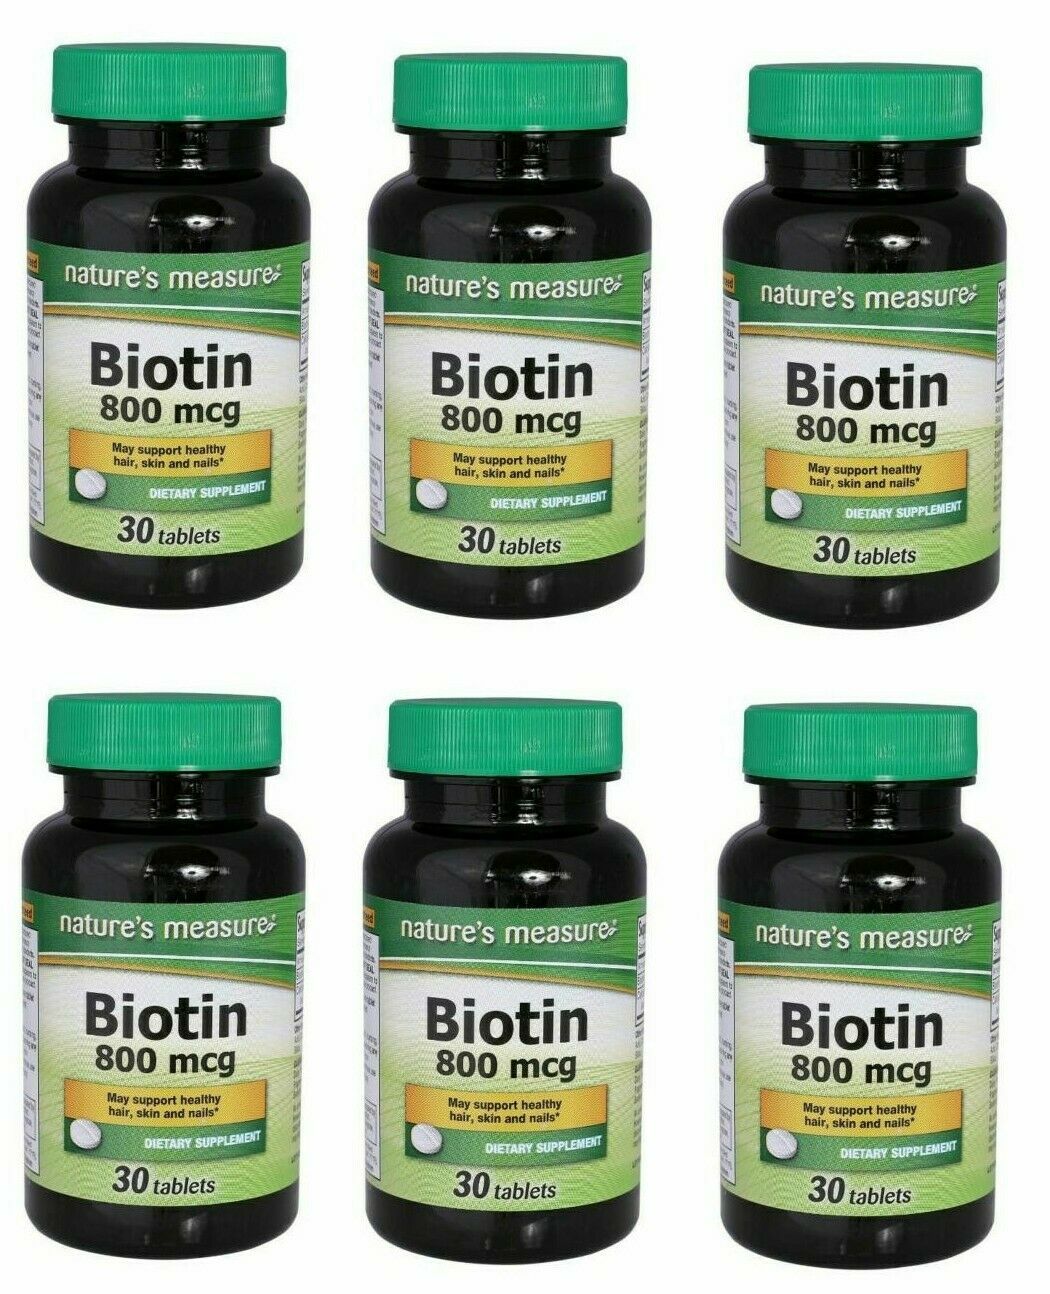 6 xBiotin 800 mg Tablets 30 Capsules Brand New SEALED - $23.75